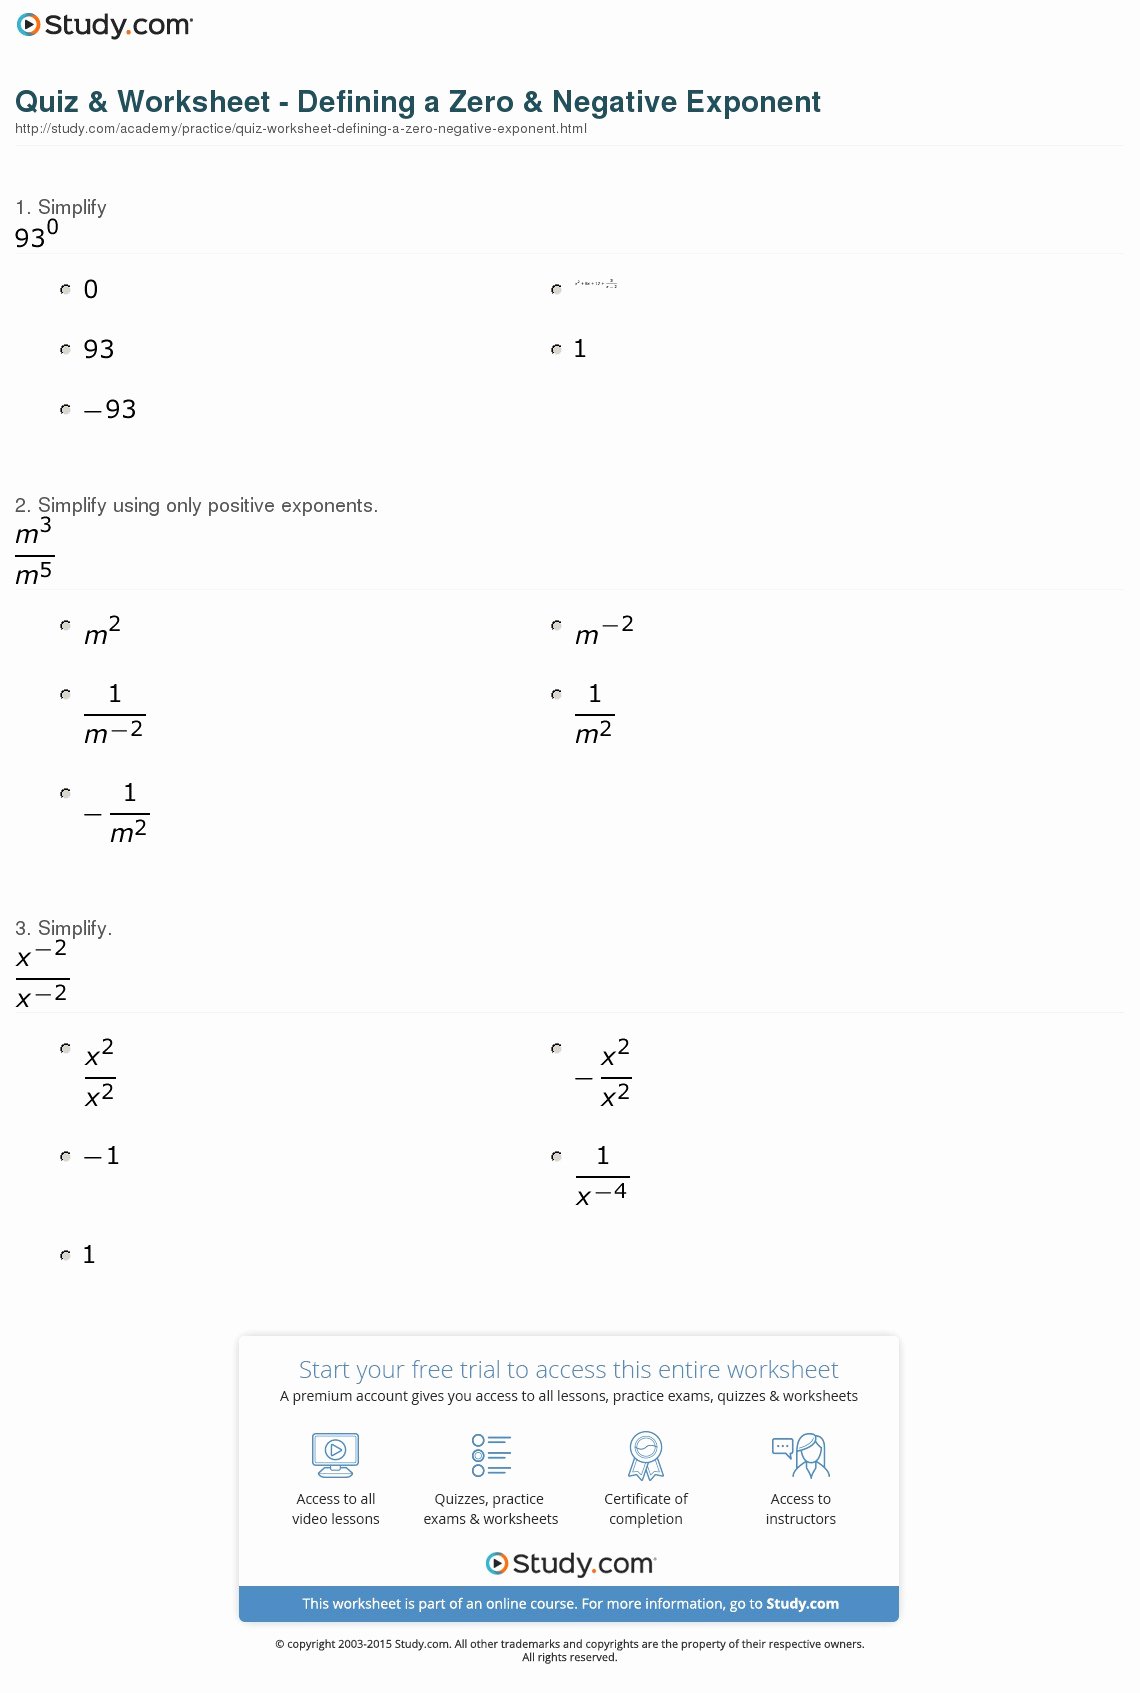 Negative Exponents Worksheet Pdf Inspirational Quiz &amp; Worksheet Defining A Zero &amp; Negative Exponent